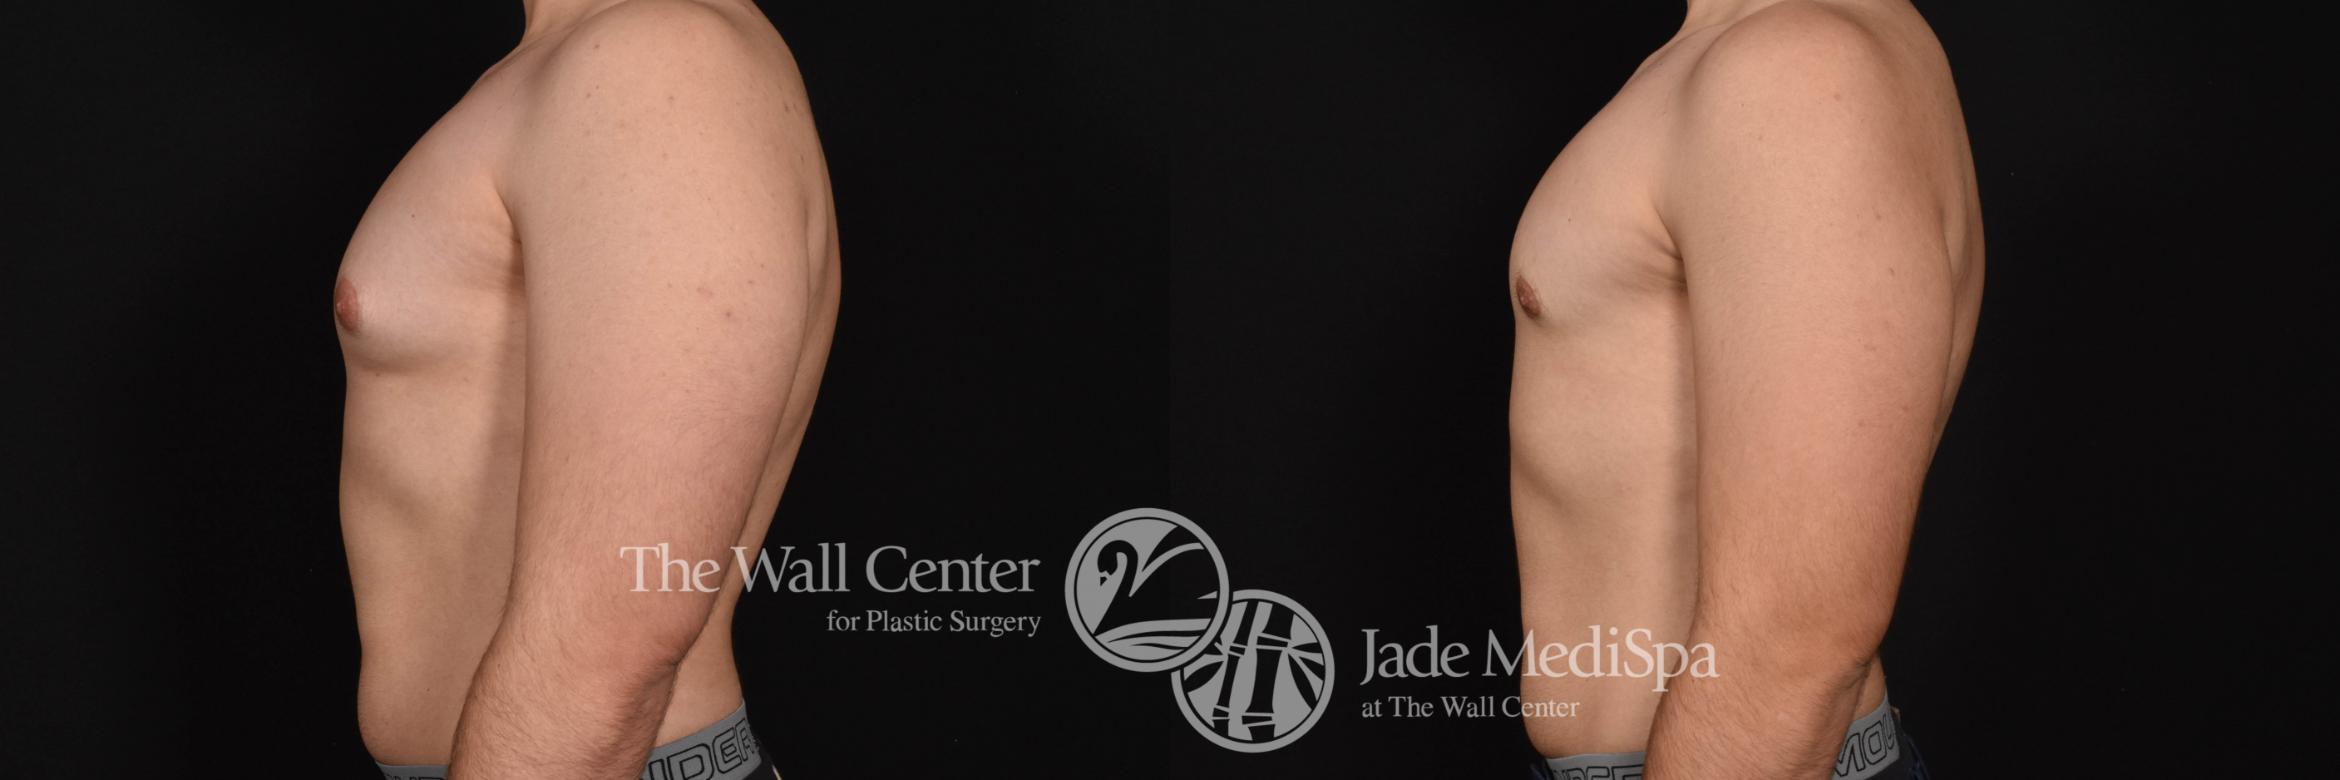 Gynecomastia Left Side Photo, Shreveport, Louisiana, The Wall Center for Plastic Surgery, Case 807